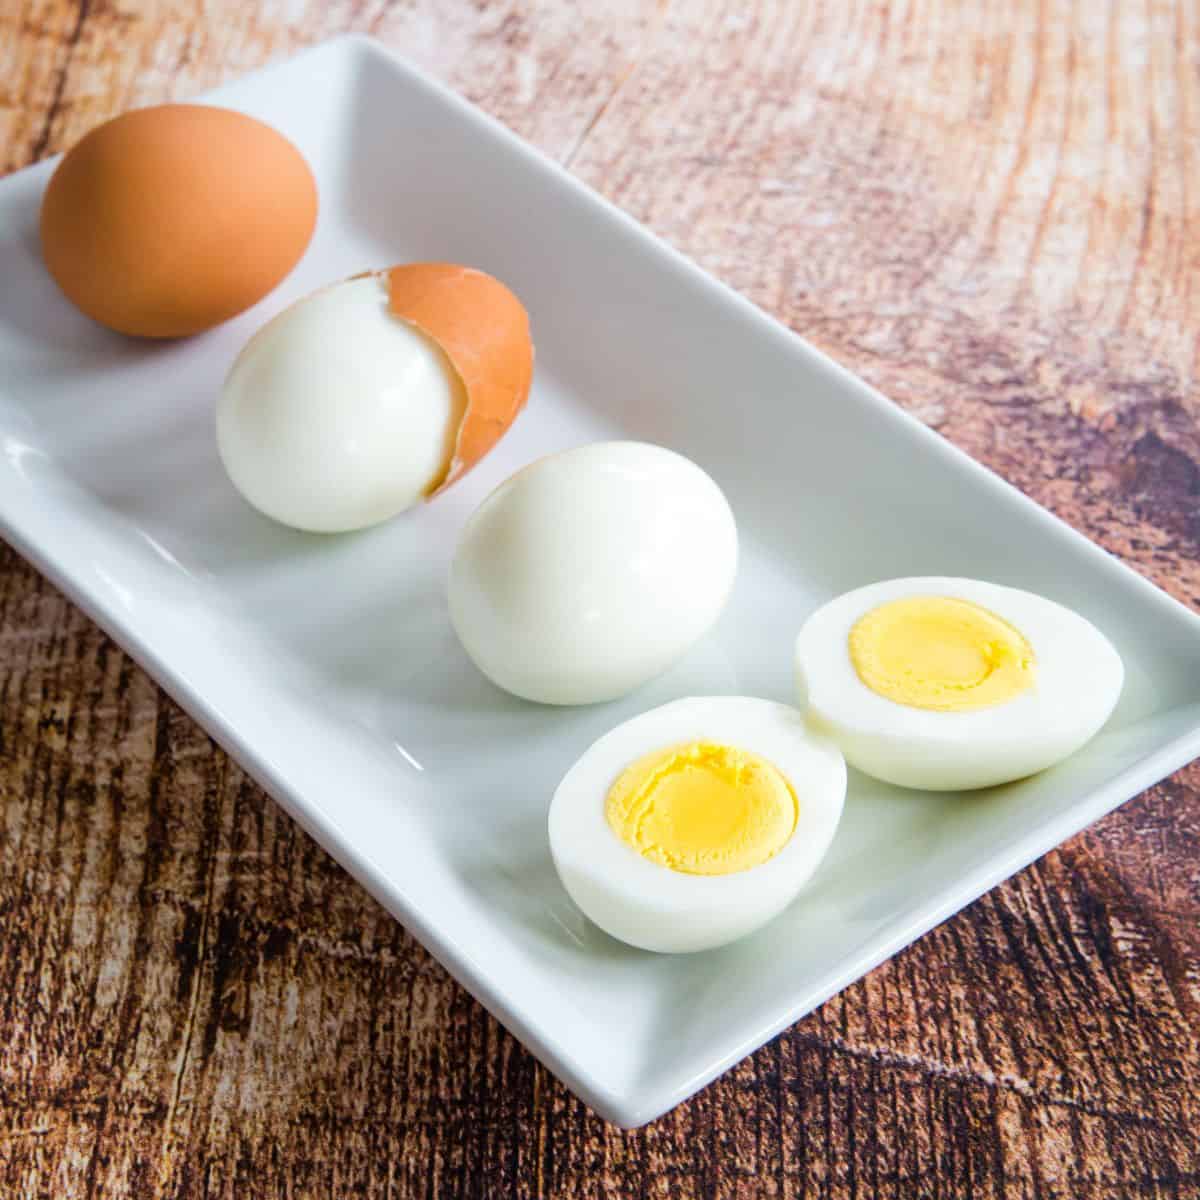 https://cupcakesandkalechips.com/wp-content/uploads/2021/06/How-to-Hard-Boil-Eggs.jpeg